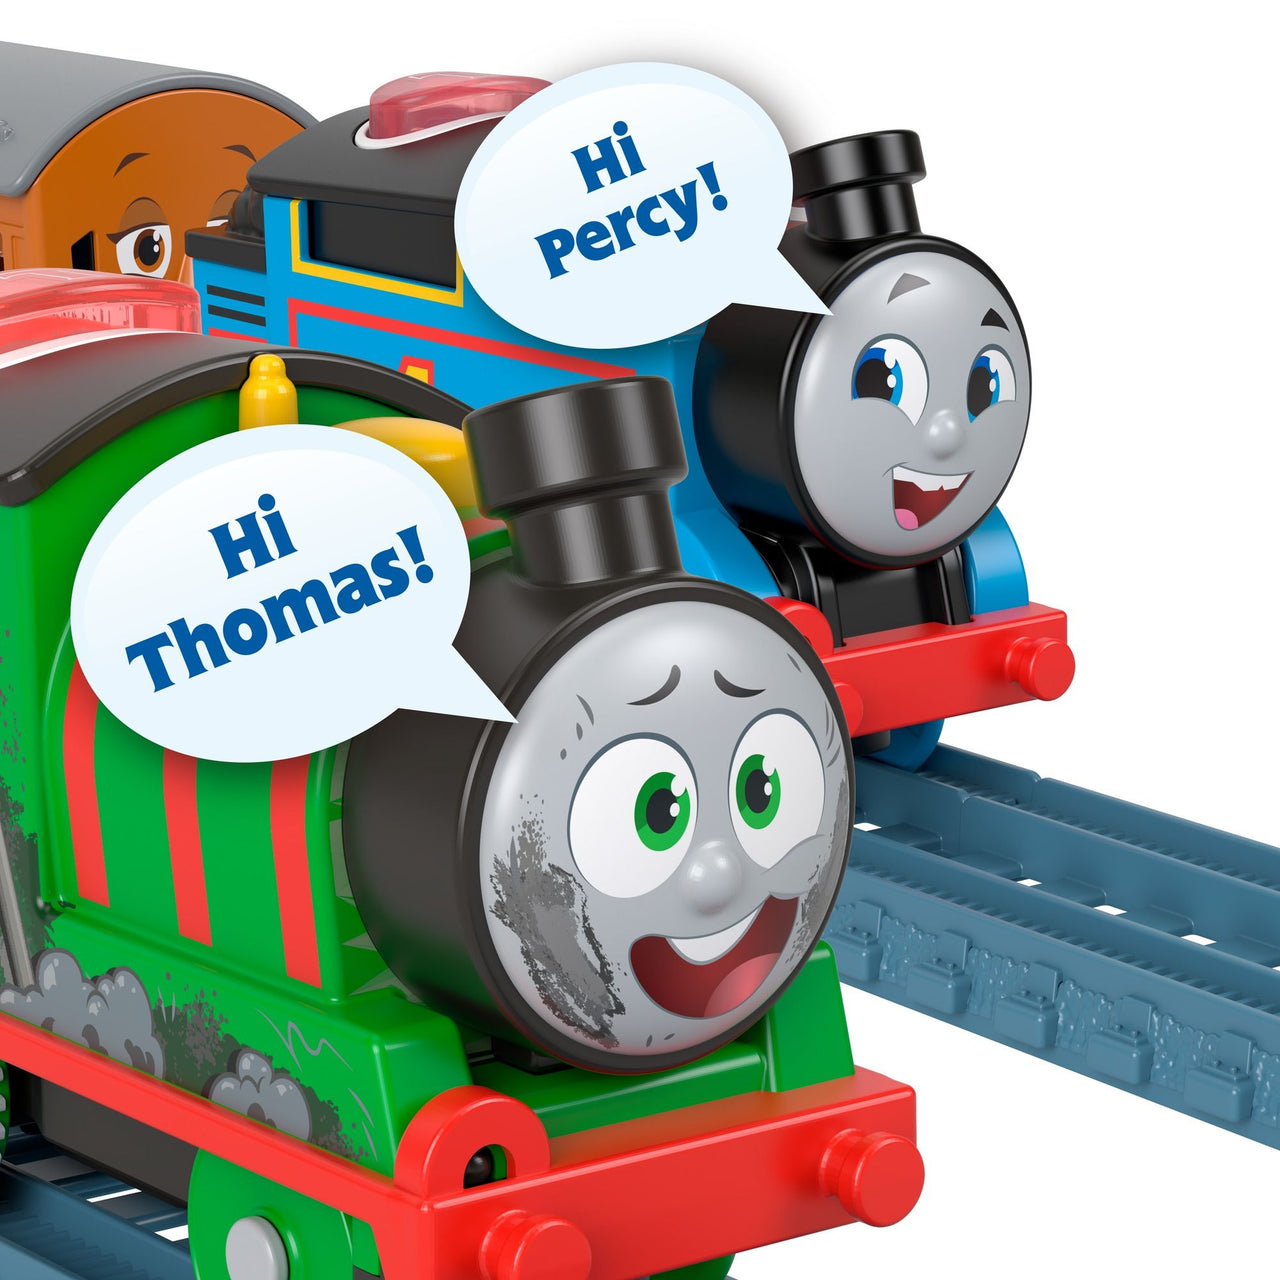 Thomas & Friends Motorised Talking Percy Thomas & Friends